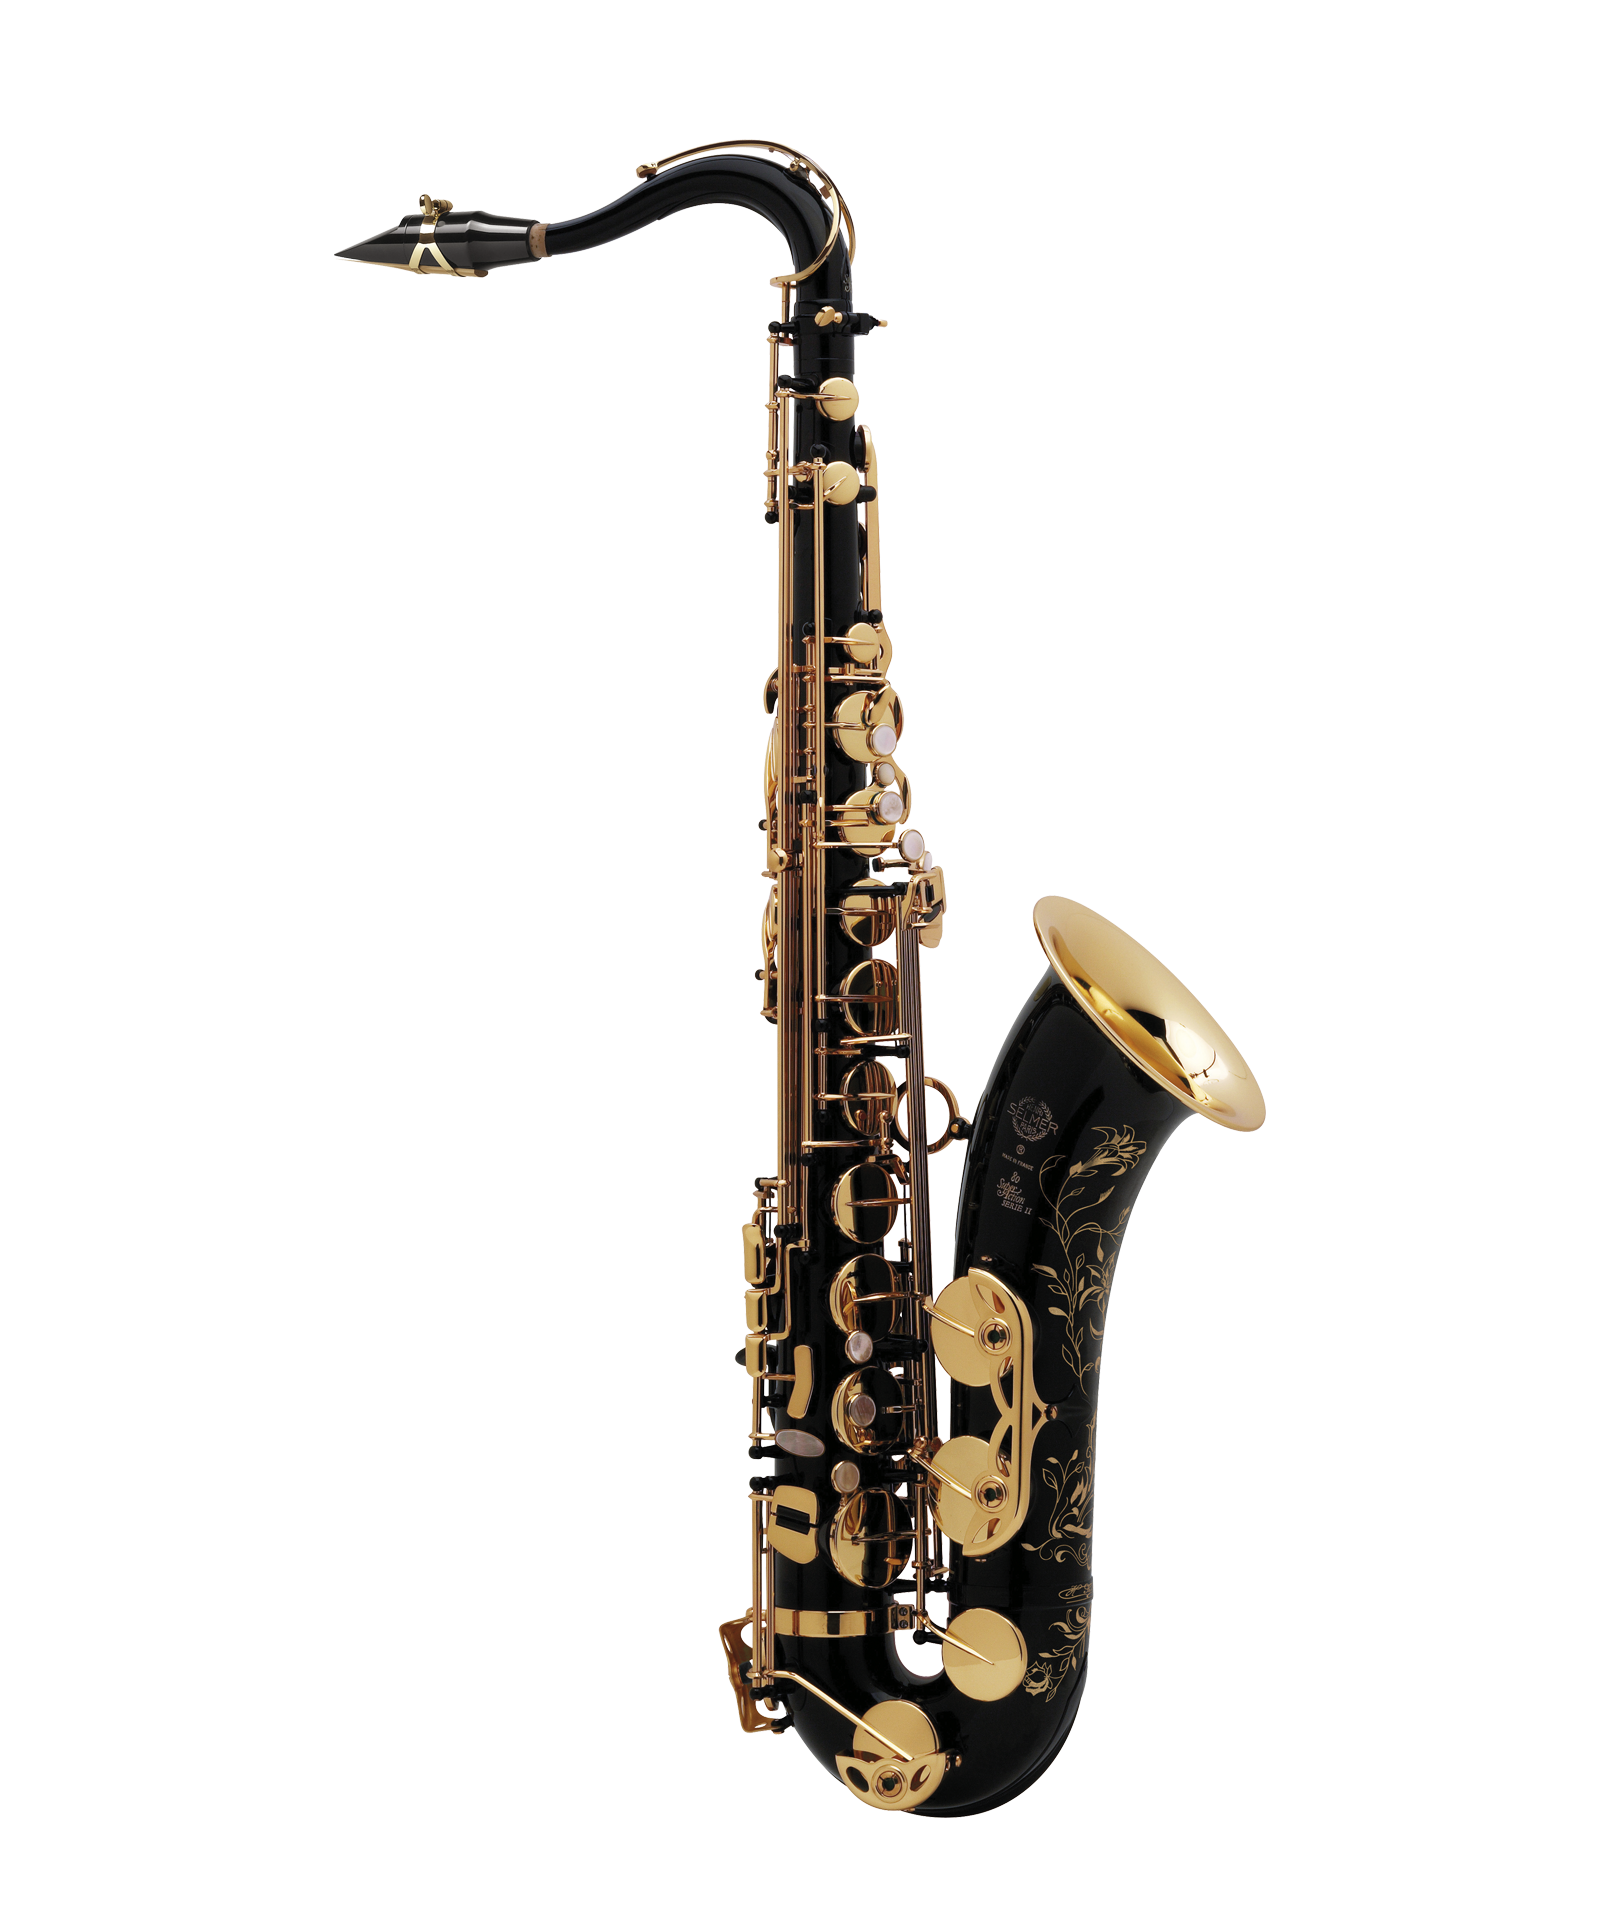 Tampon saxophone